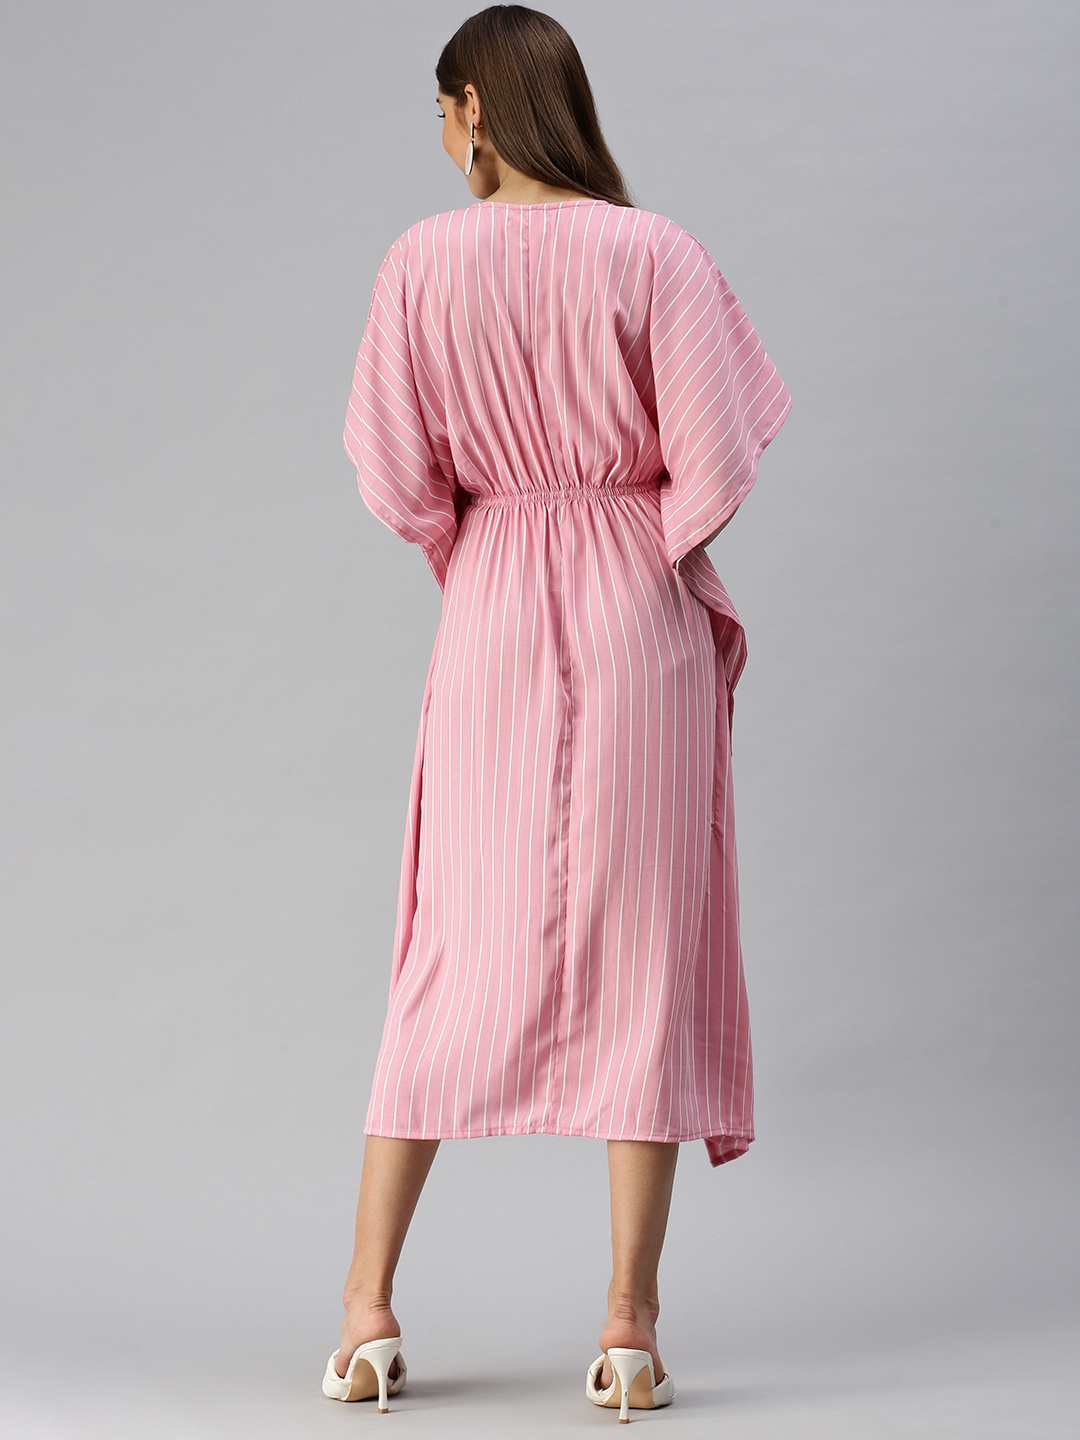 Women's Pink Striped Dress